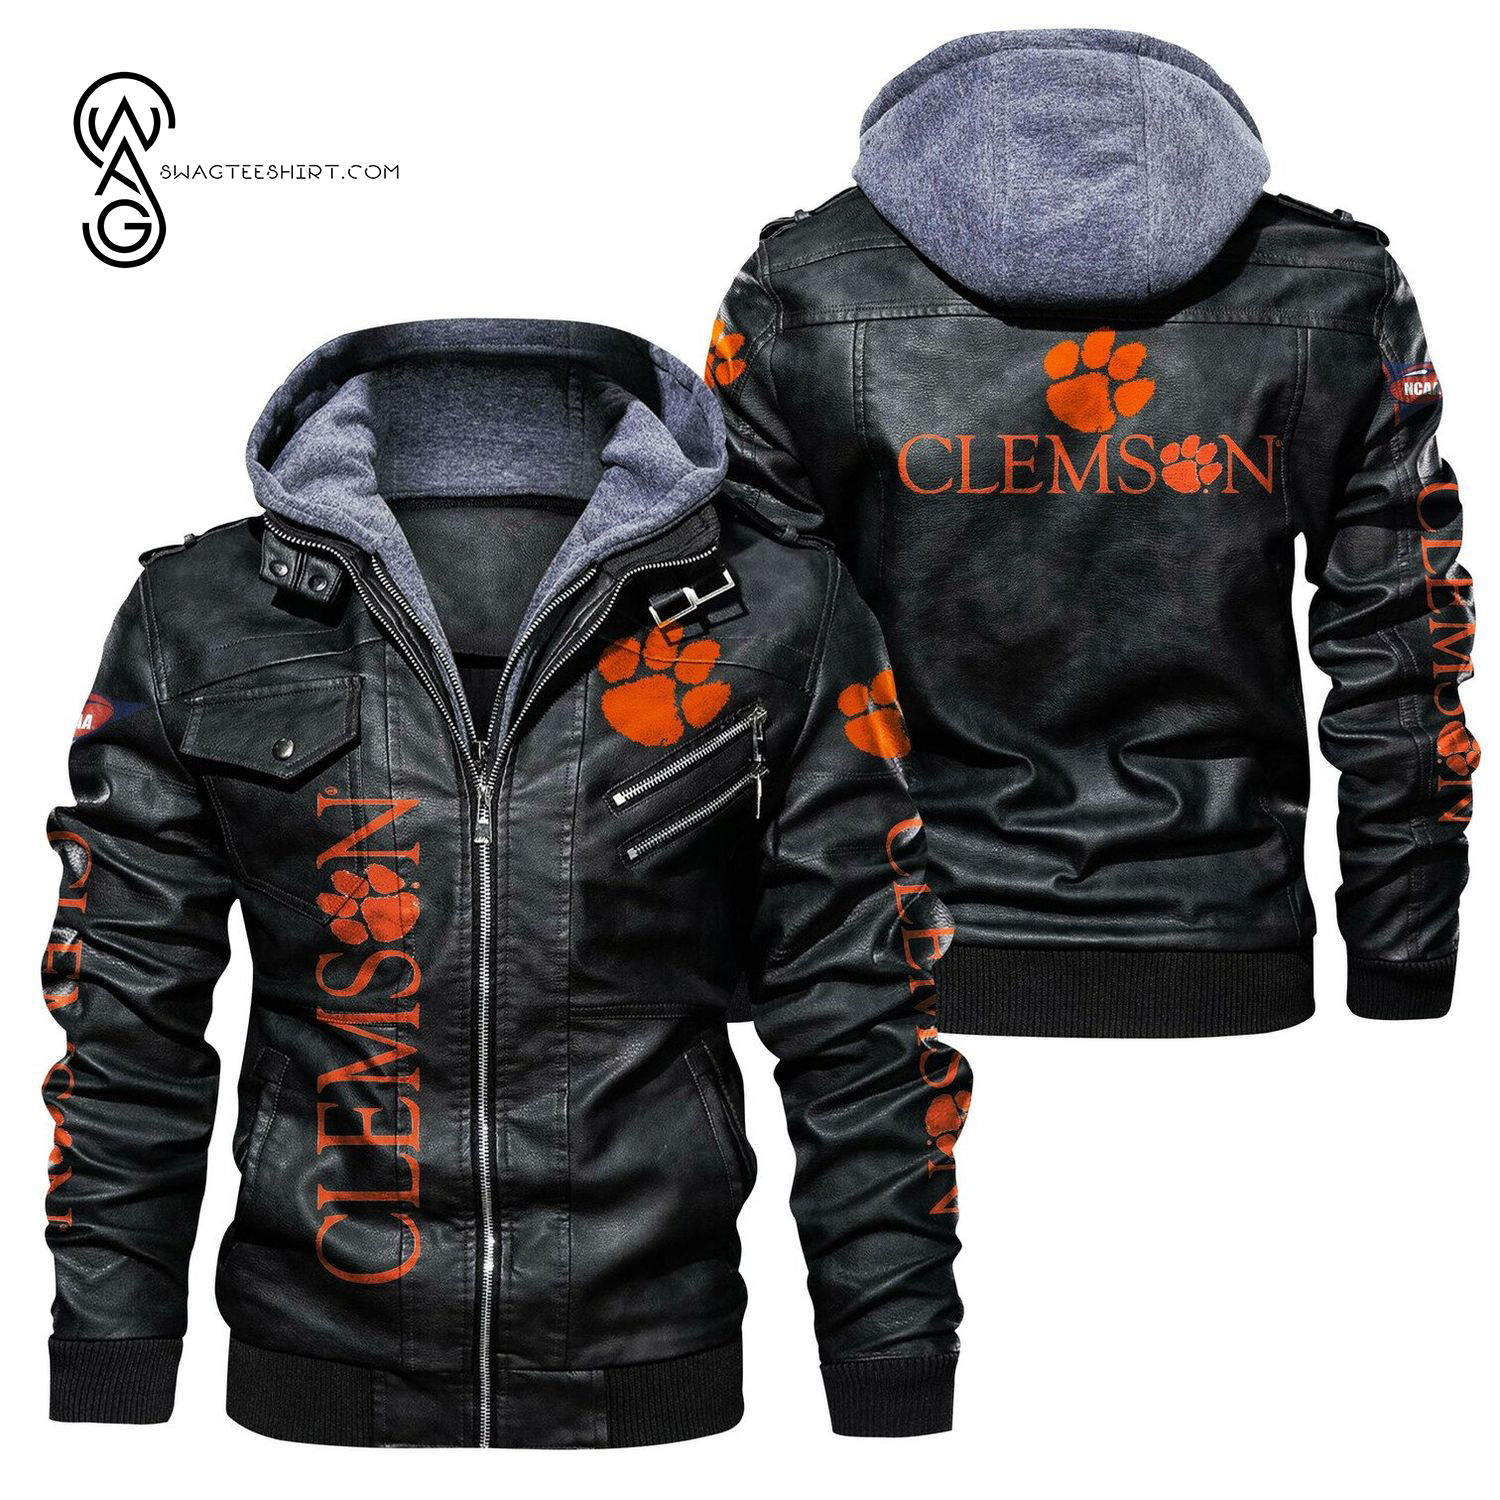 Clemson Tigers Sport Team Leather Jacket